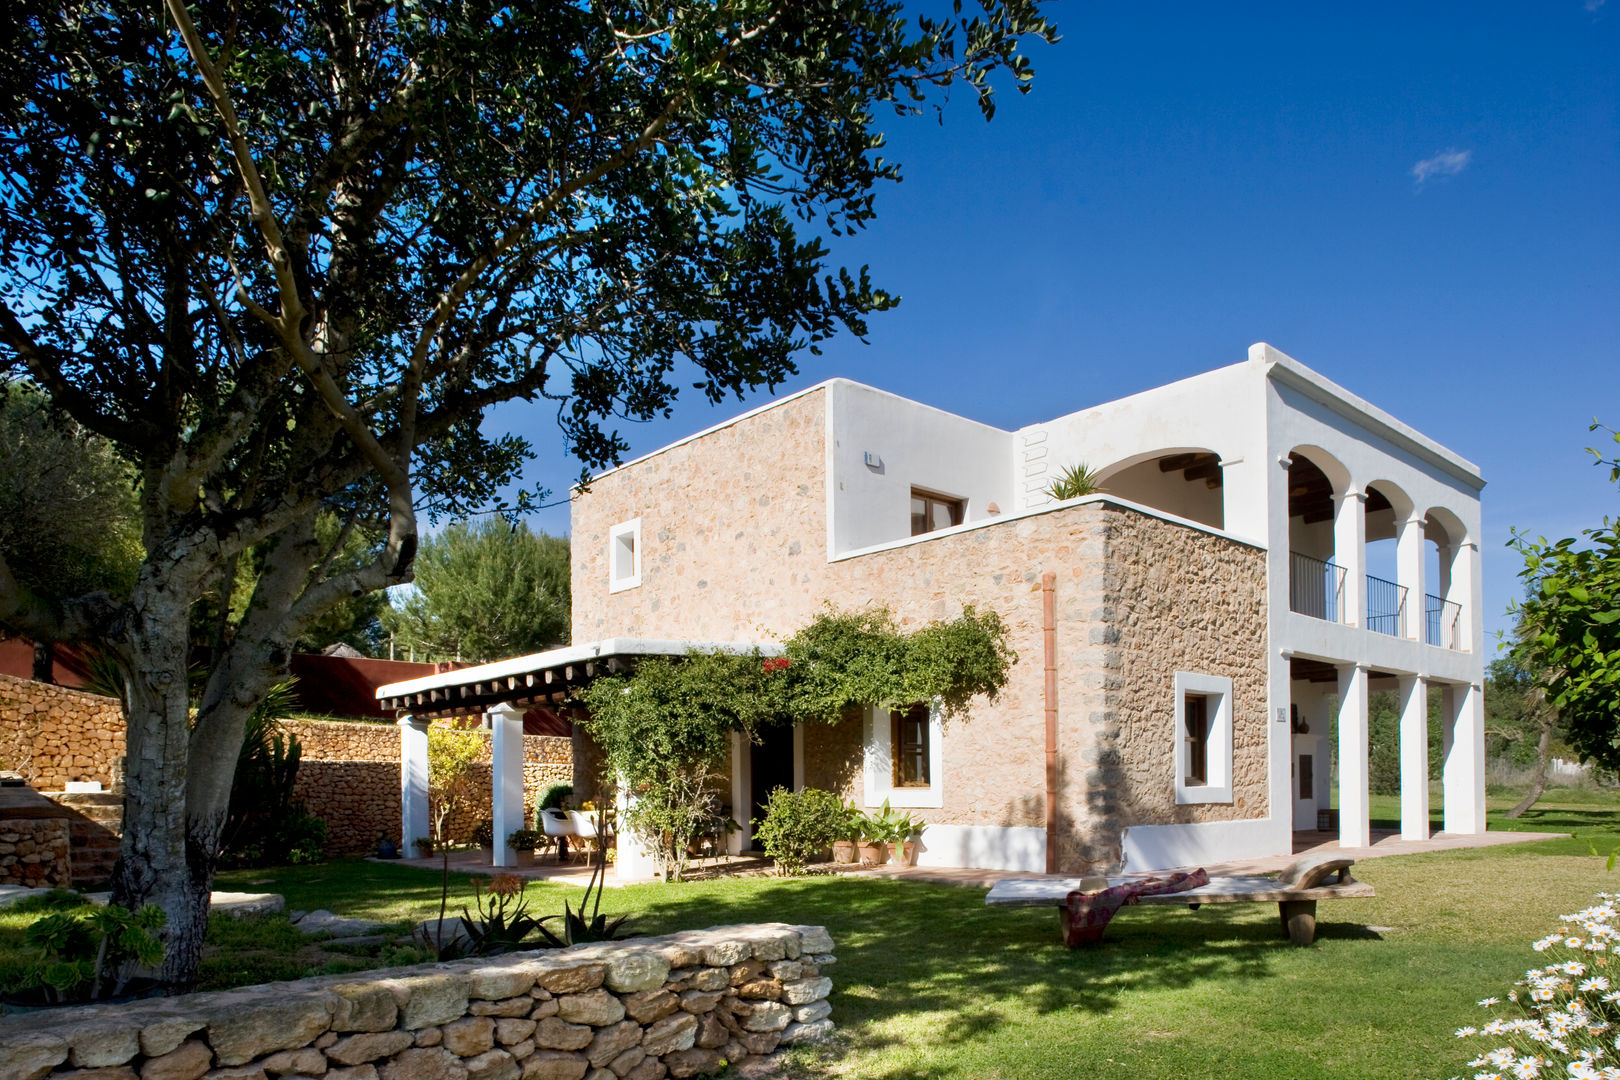 Casa en Ibiza, recdi8 recdi8 Maisons rurales